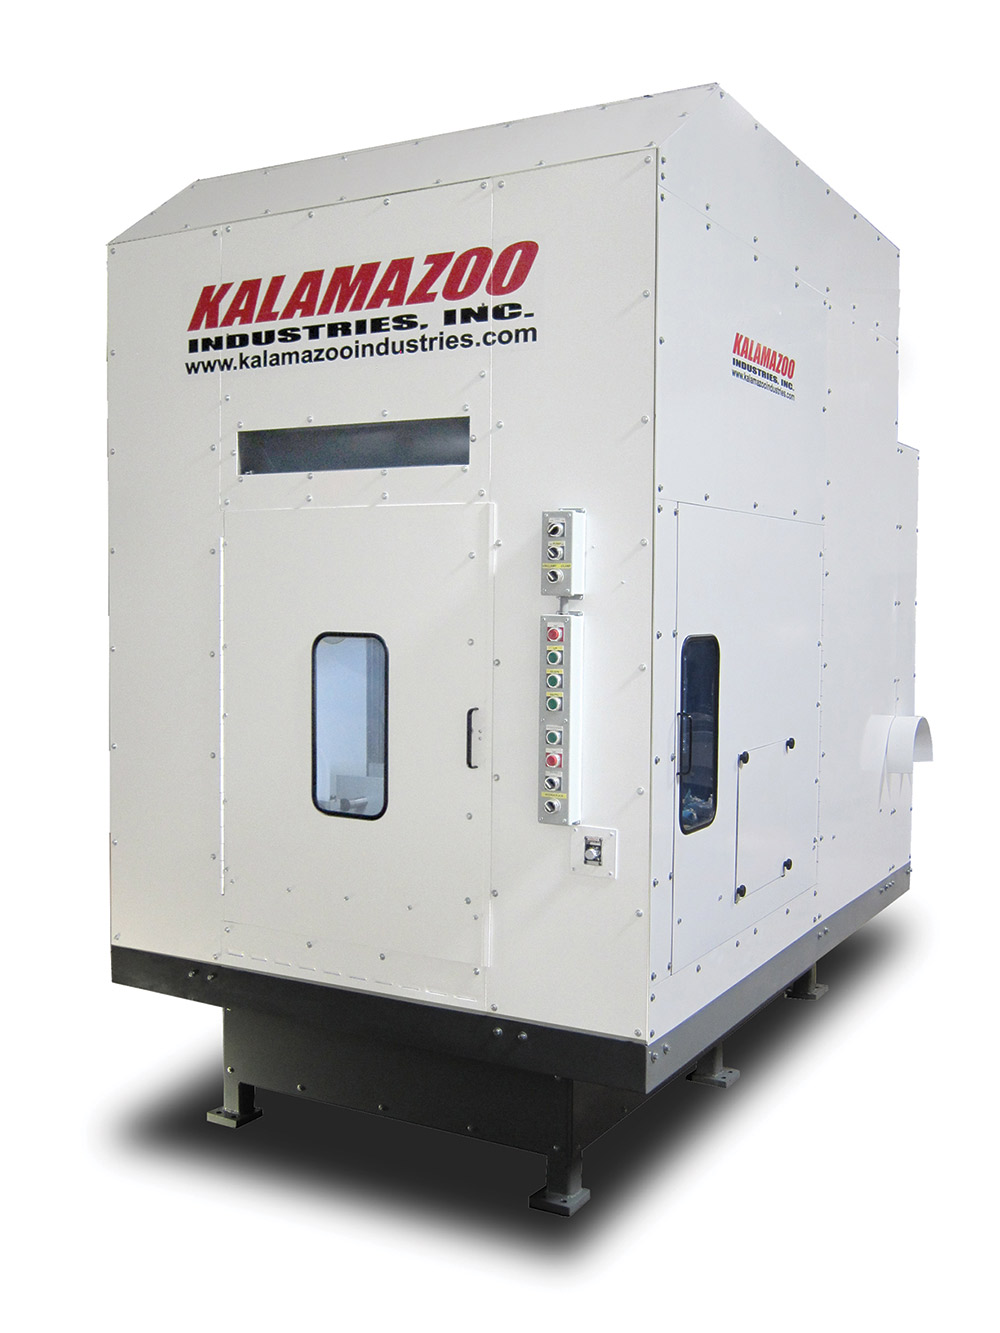 The Kalamazoo Industries model K44E 44-inch enclosed wet abrasive metallurgical saw